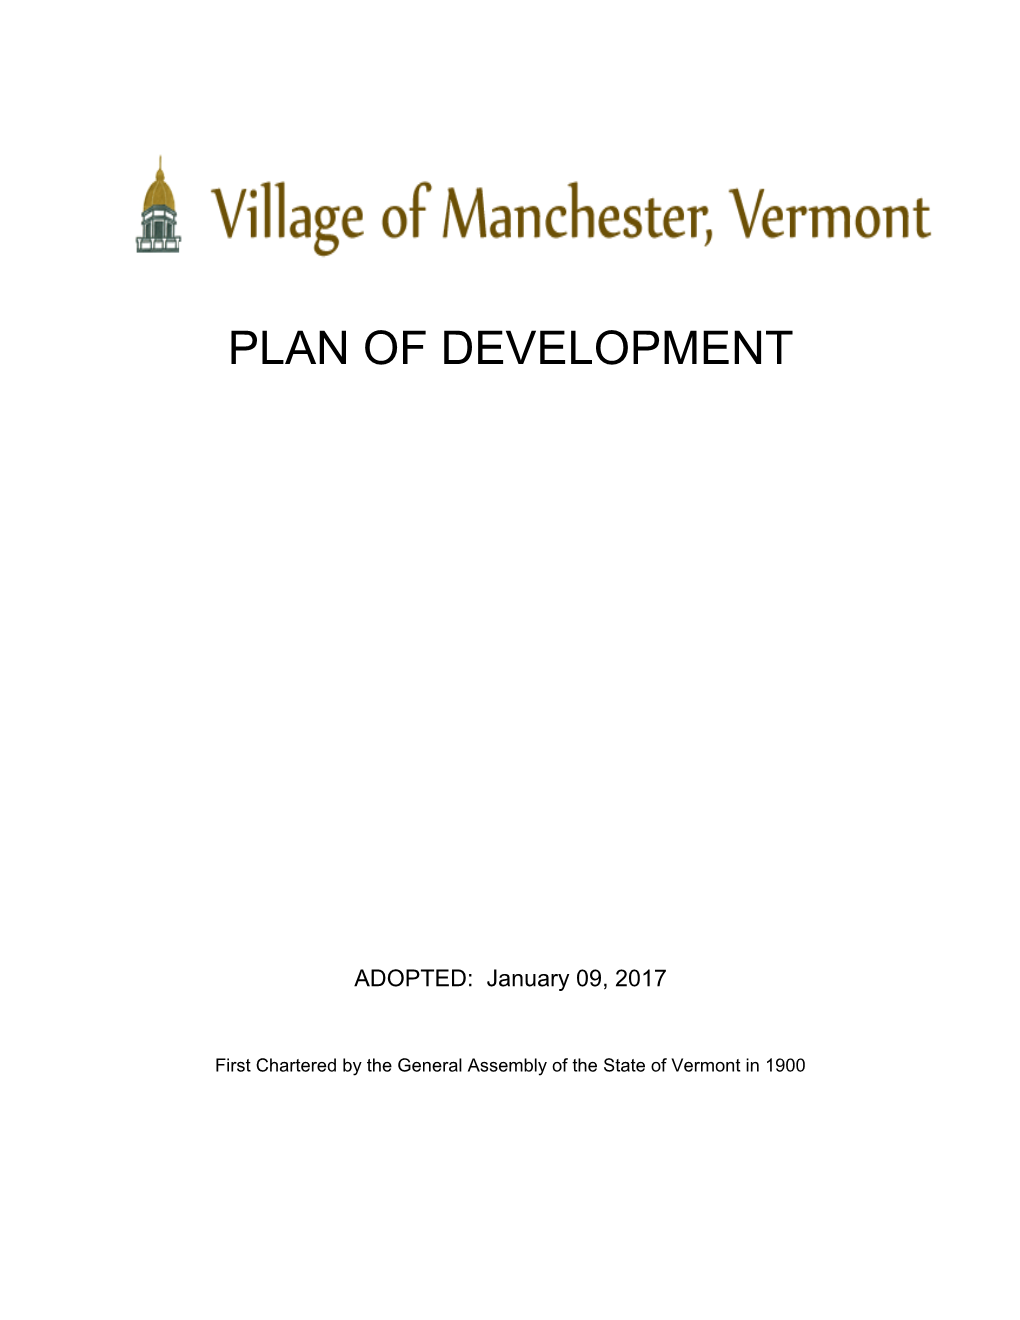 Plan of Development